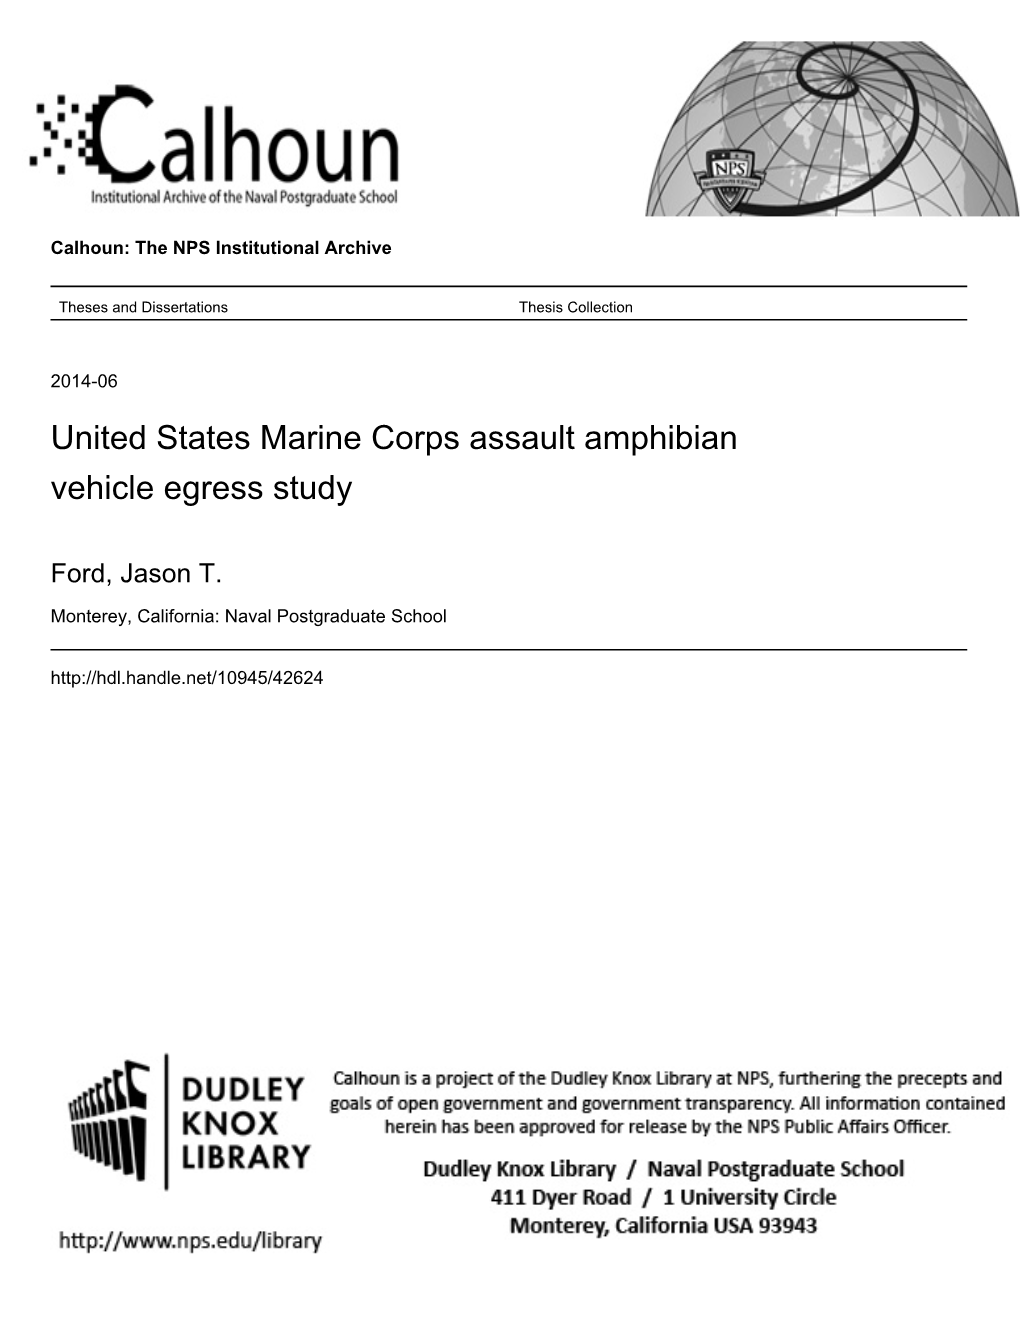 United States Marine Corps Assault Amphibian Vehicle Egress Study